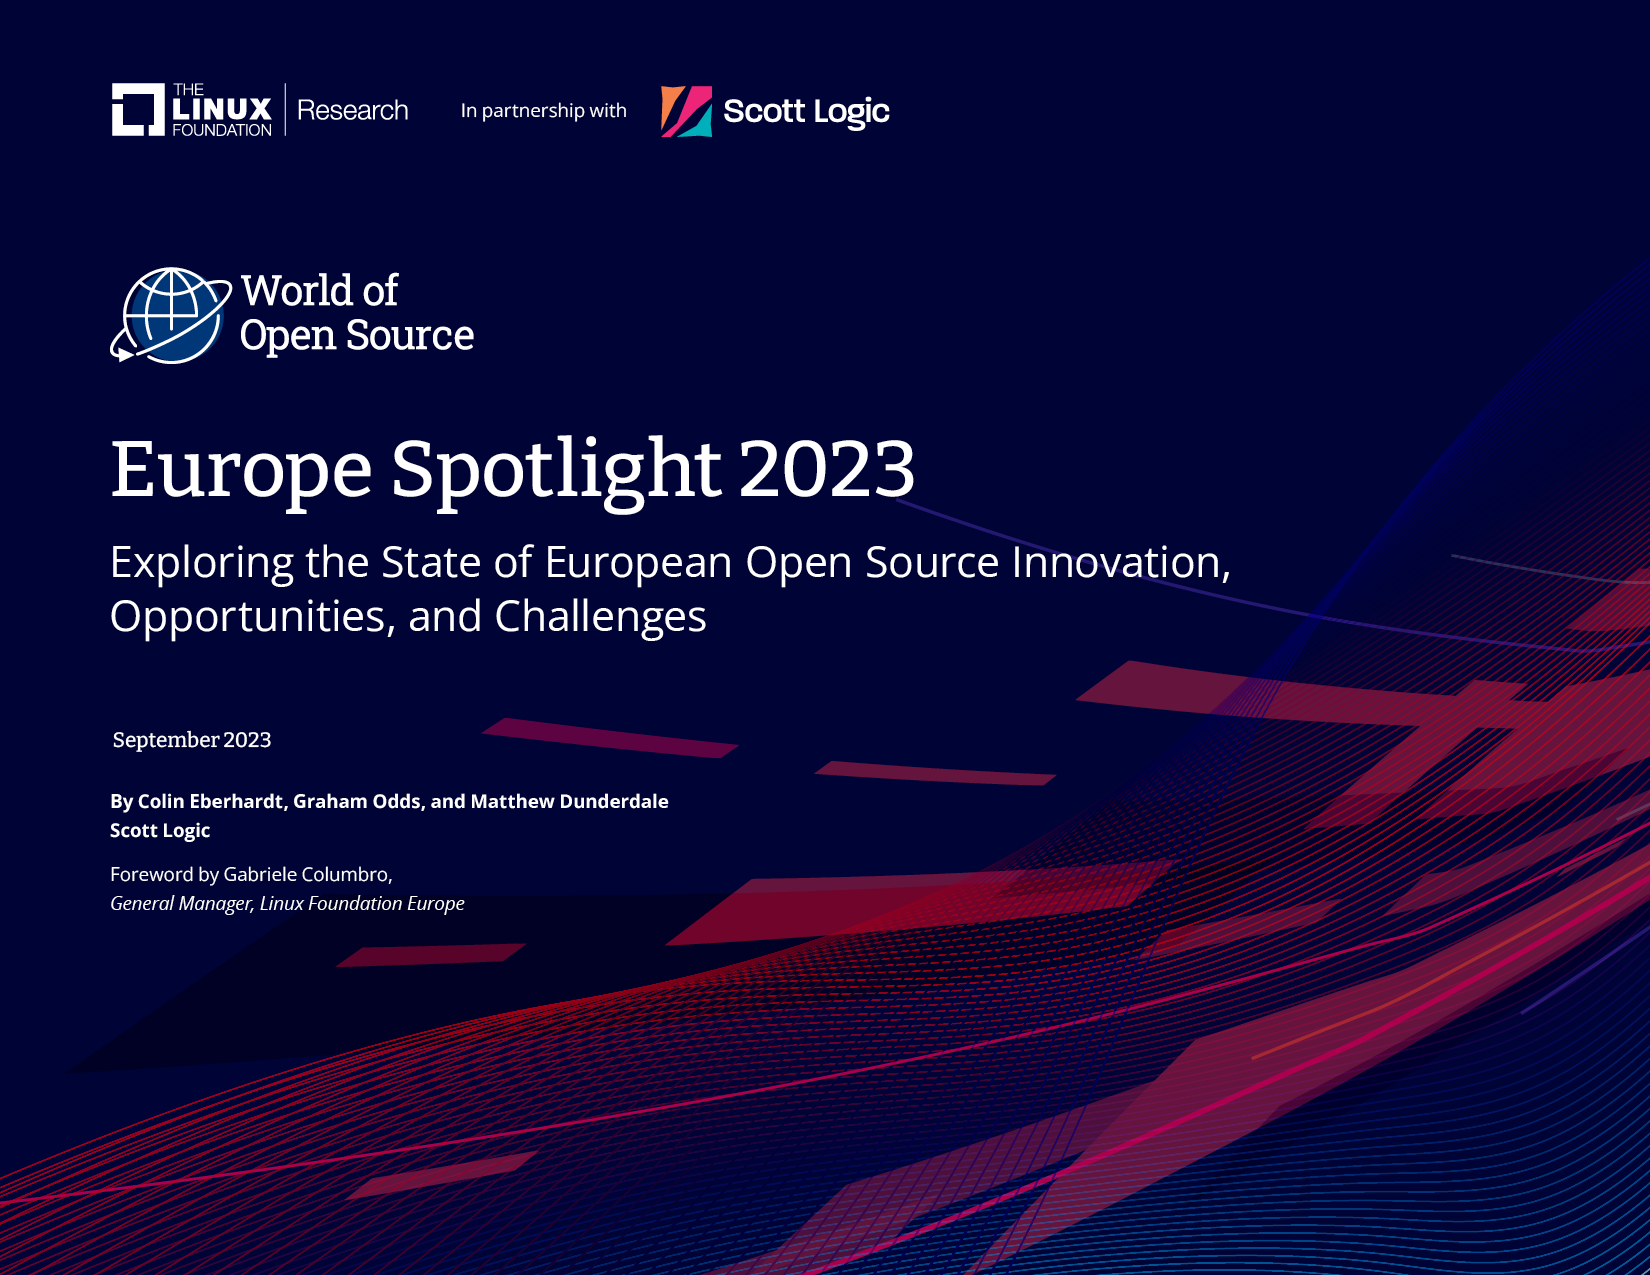 WoOS_Europe Spotlight 2023_Cover